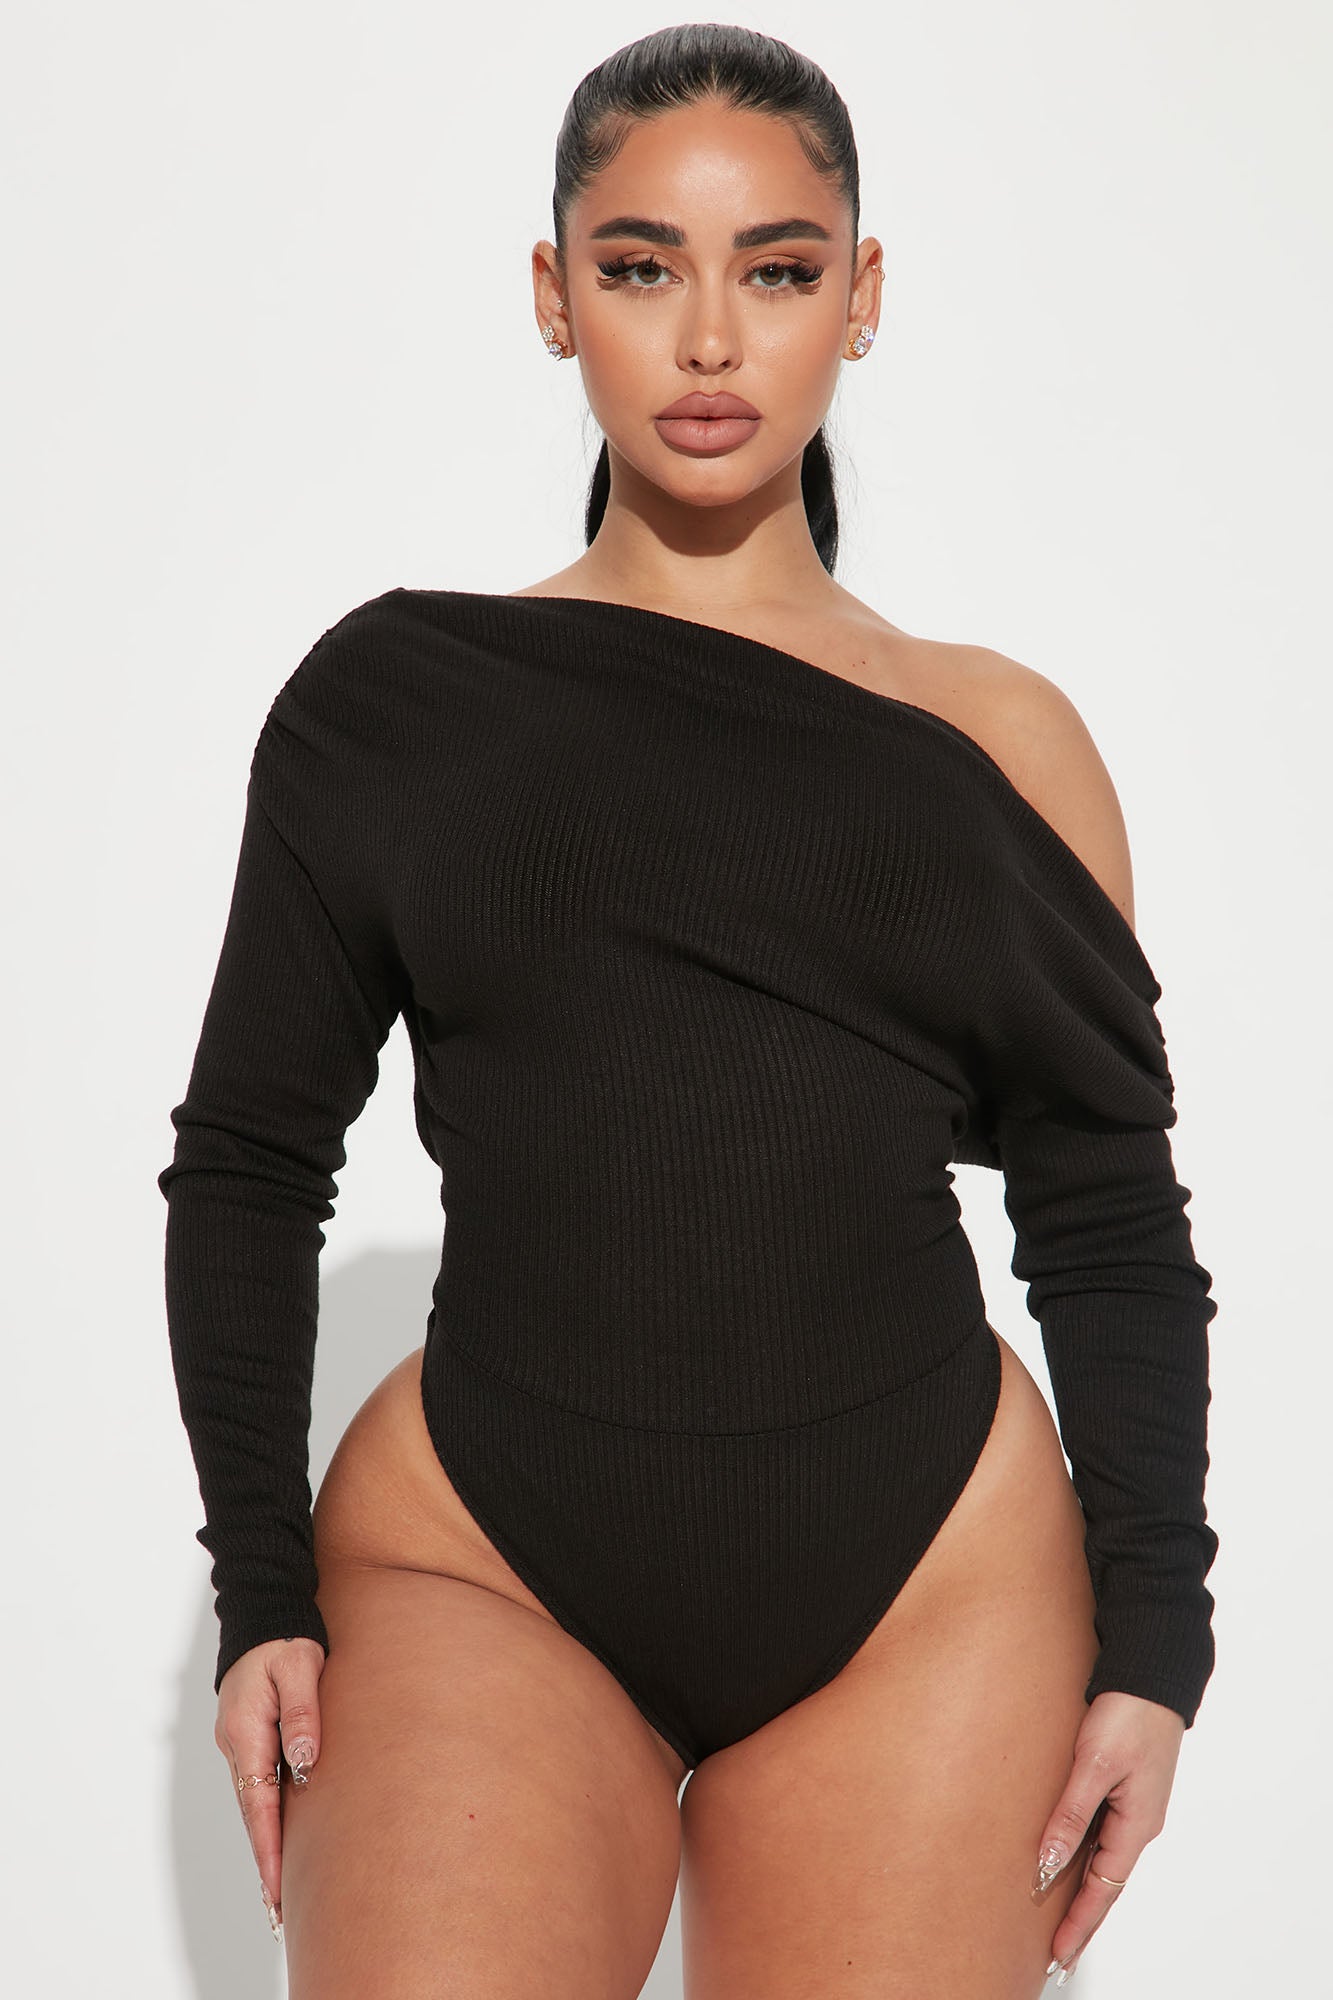 Groupie Love Graphic Bodysuit - Black, Fashion Nova, Screens Tops and  Bottoms